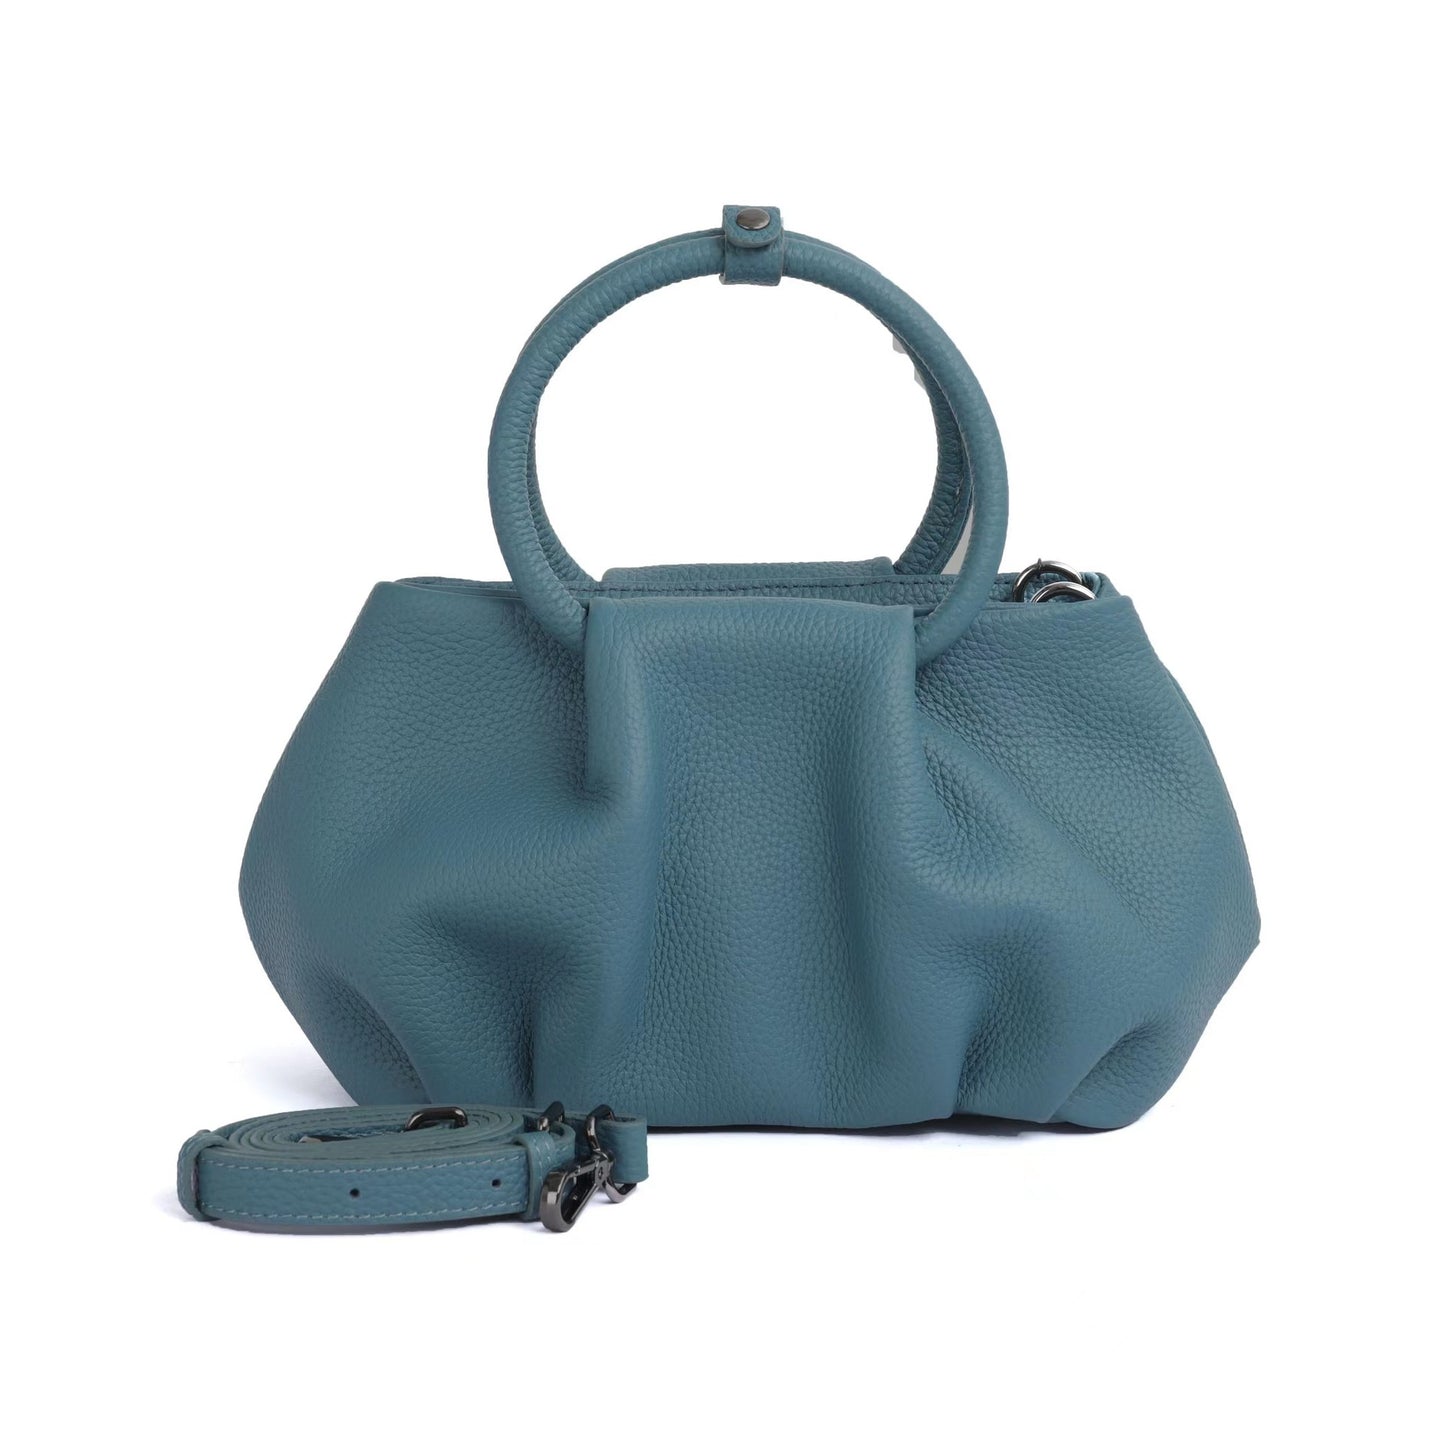 Original Design Pleated Leather Women's Bag